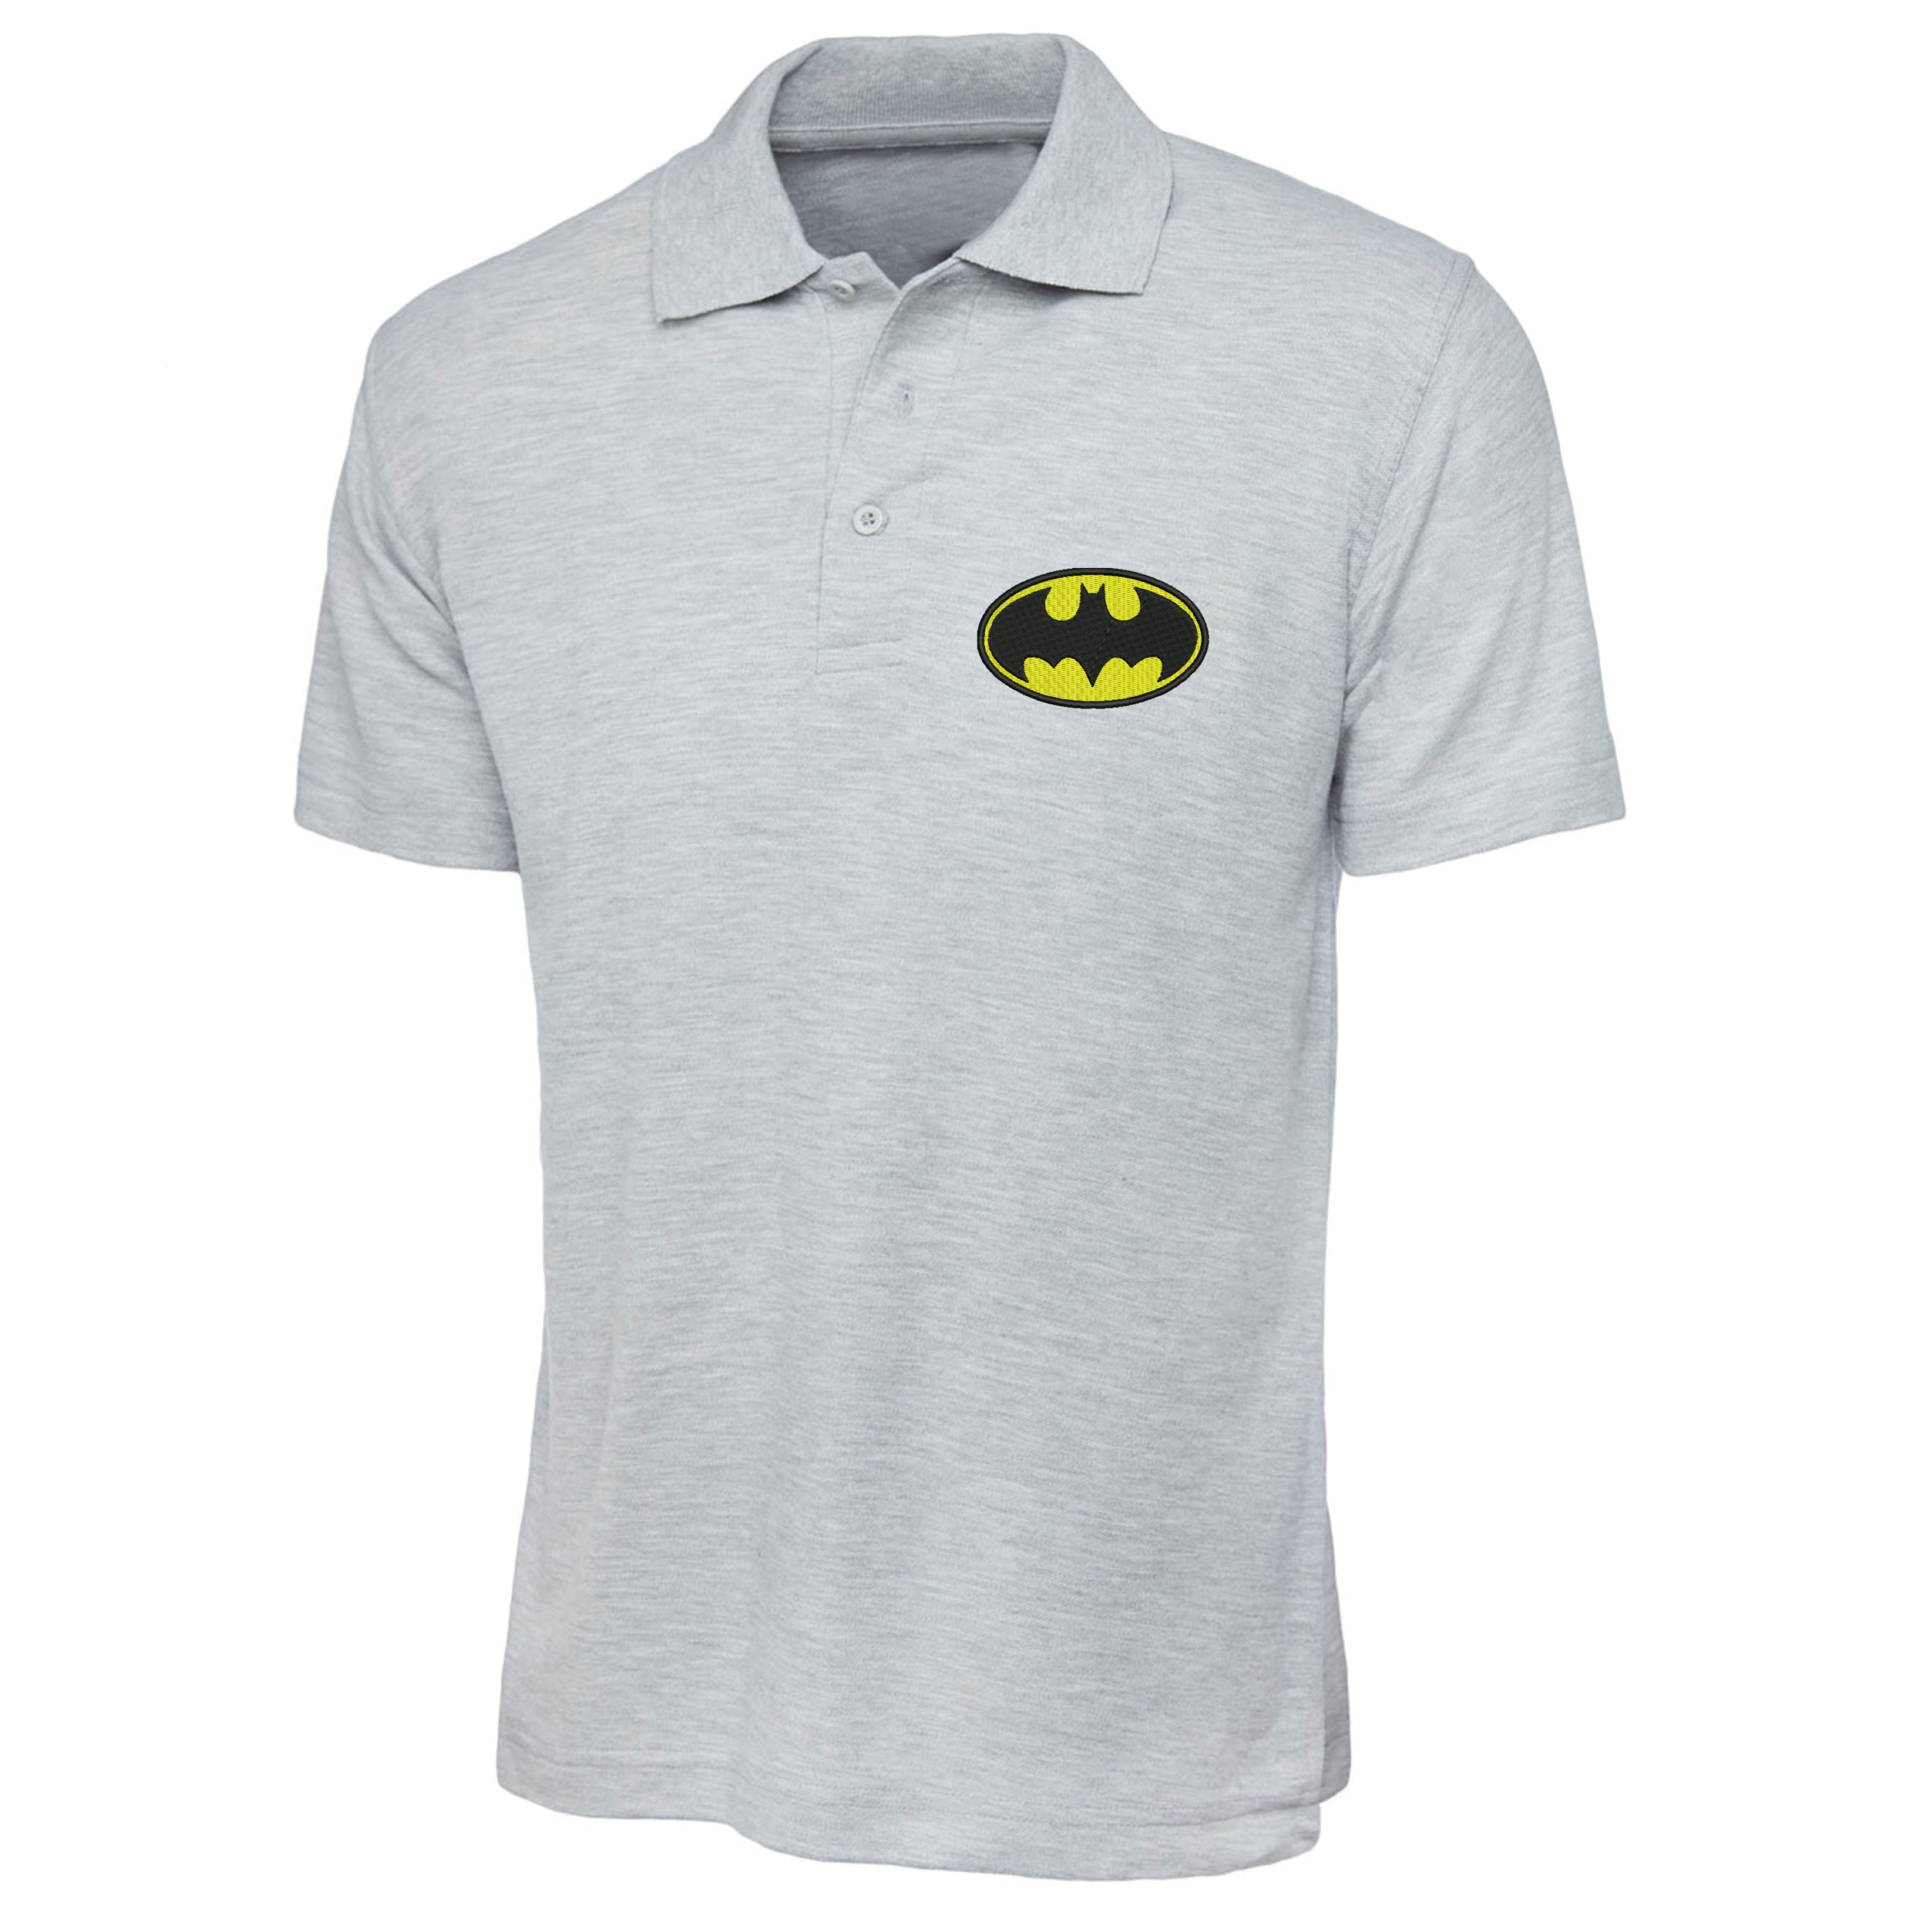 Batman Polo Shirt Usdchfchartcom - roblox t shirt colorful tie usdchfchartcom